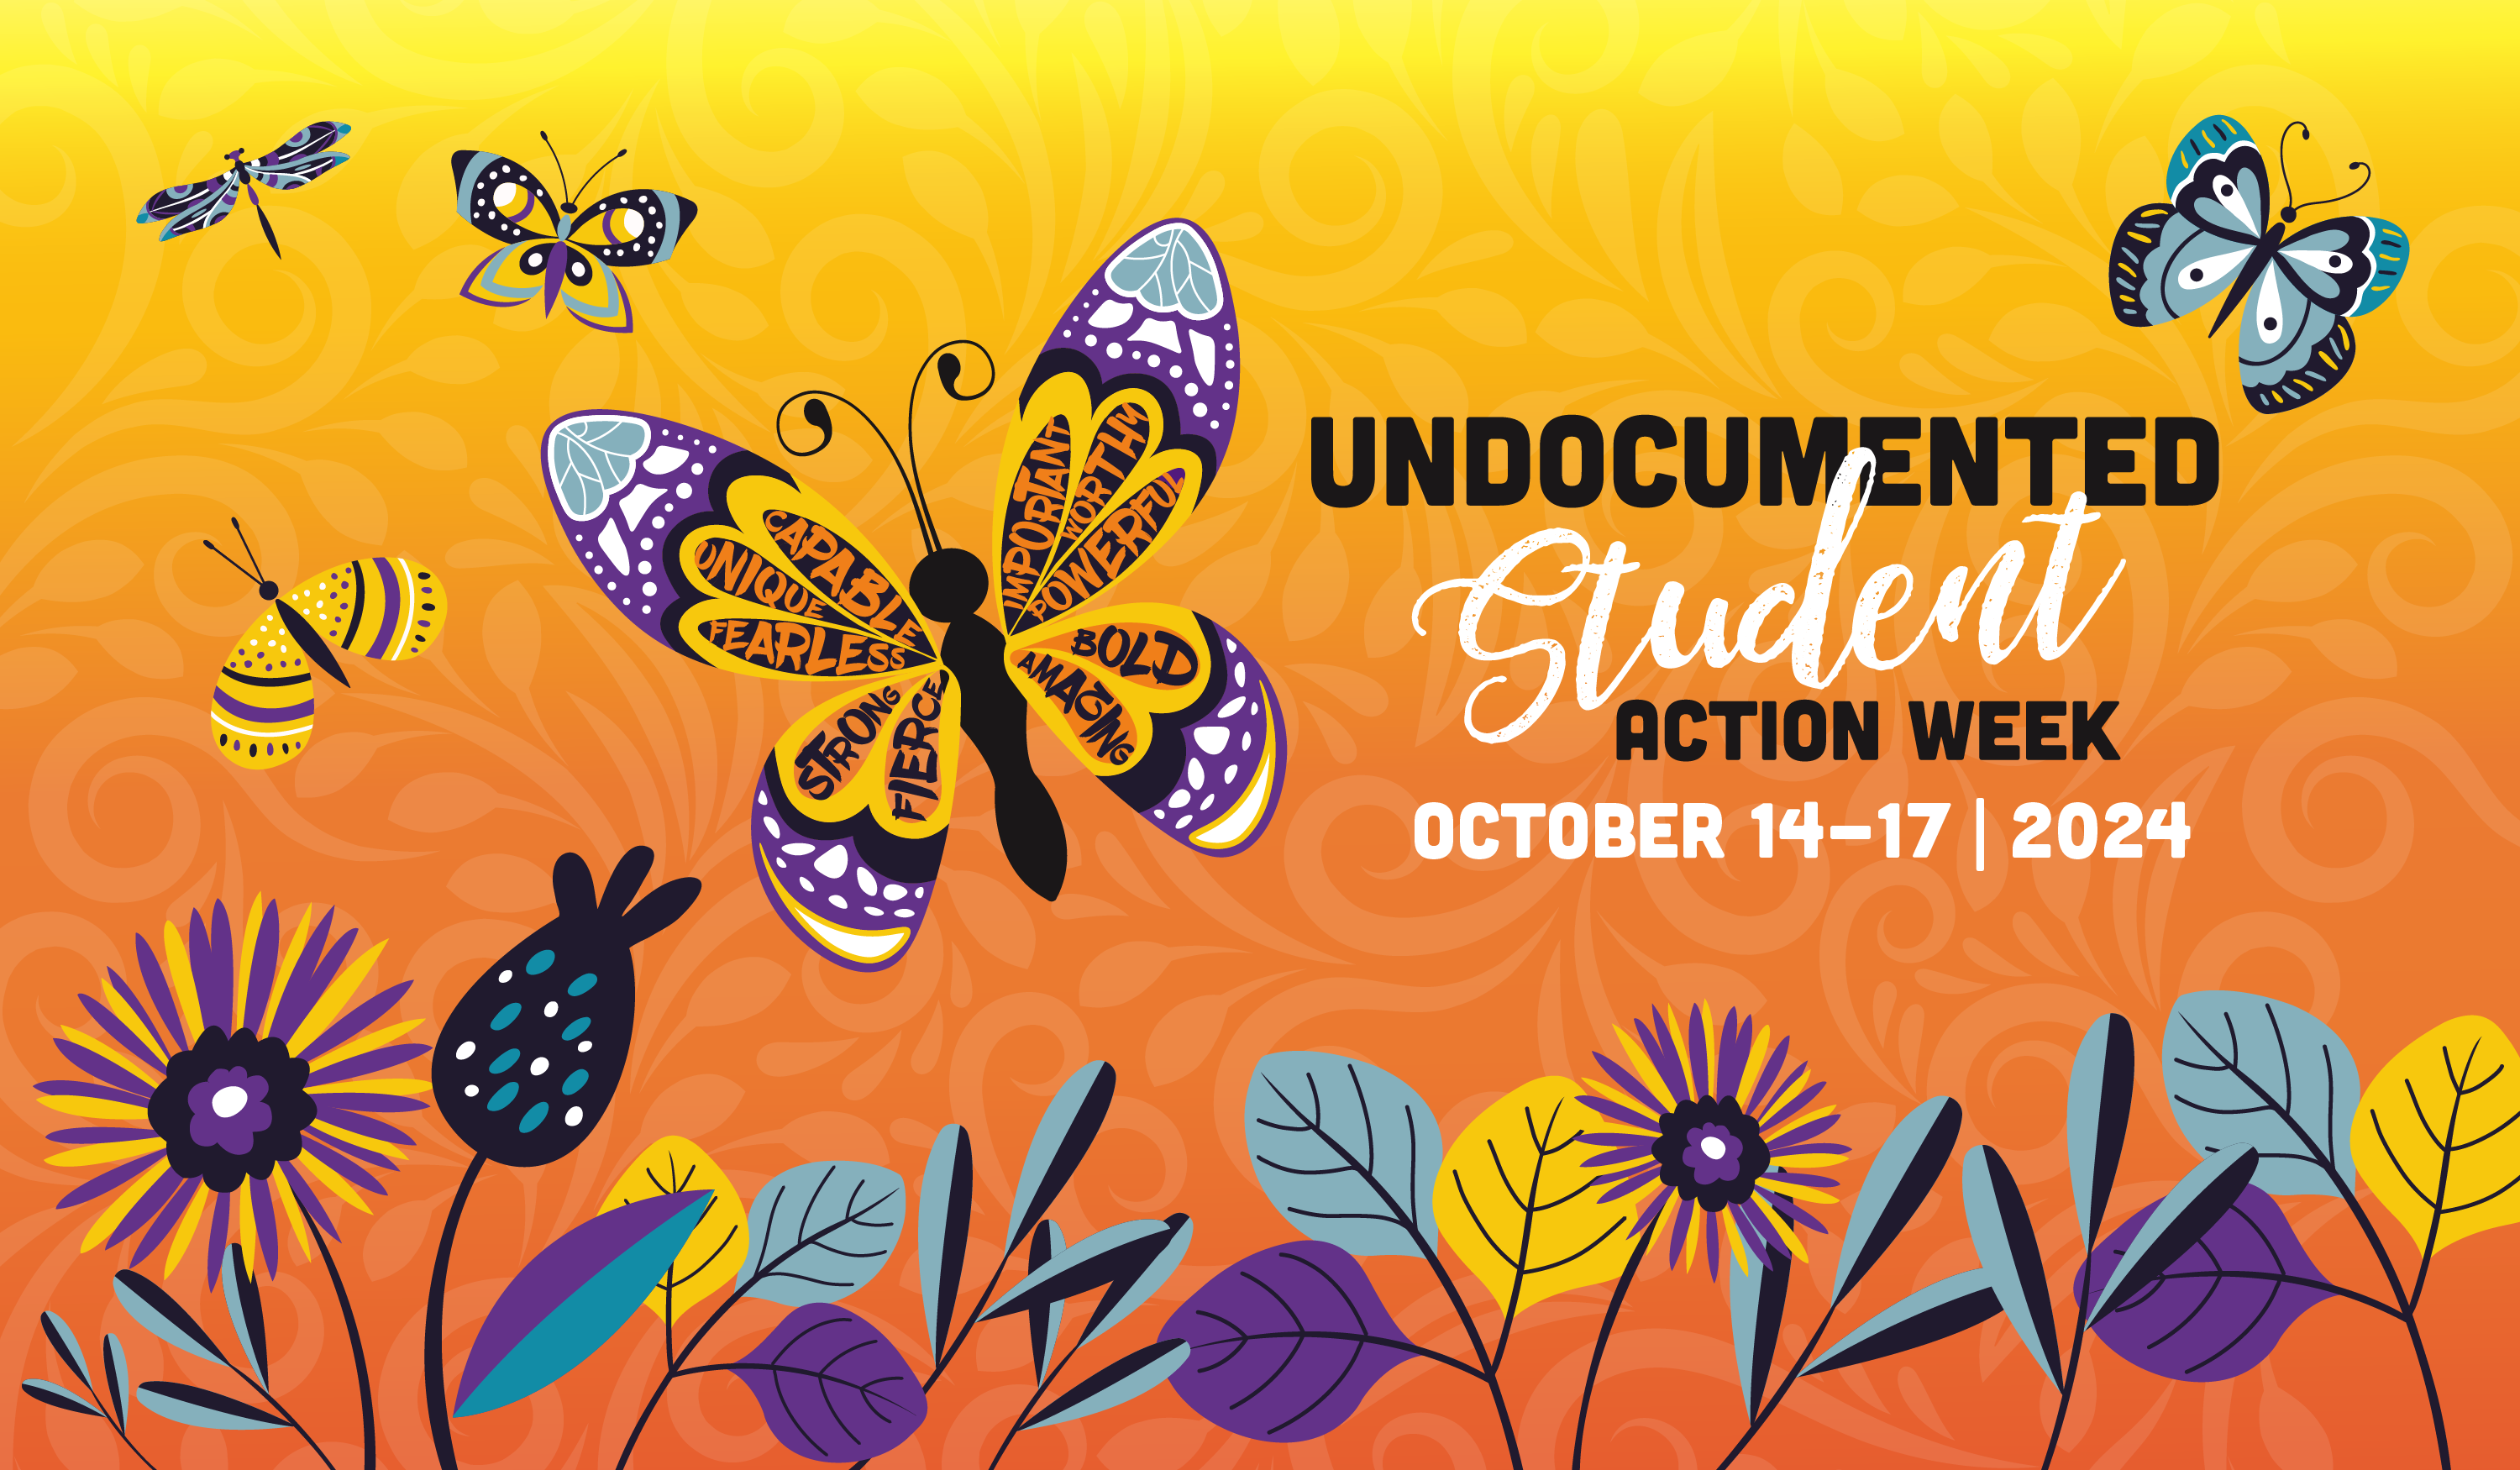 undocumented student action week october 14-17, 2024